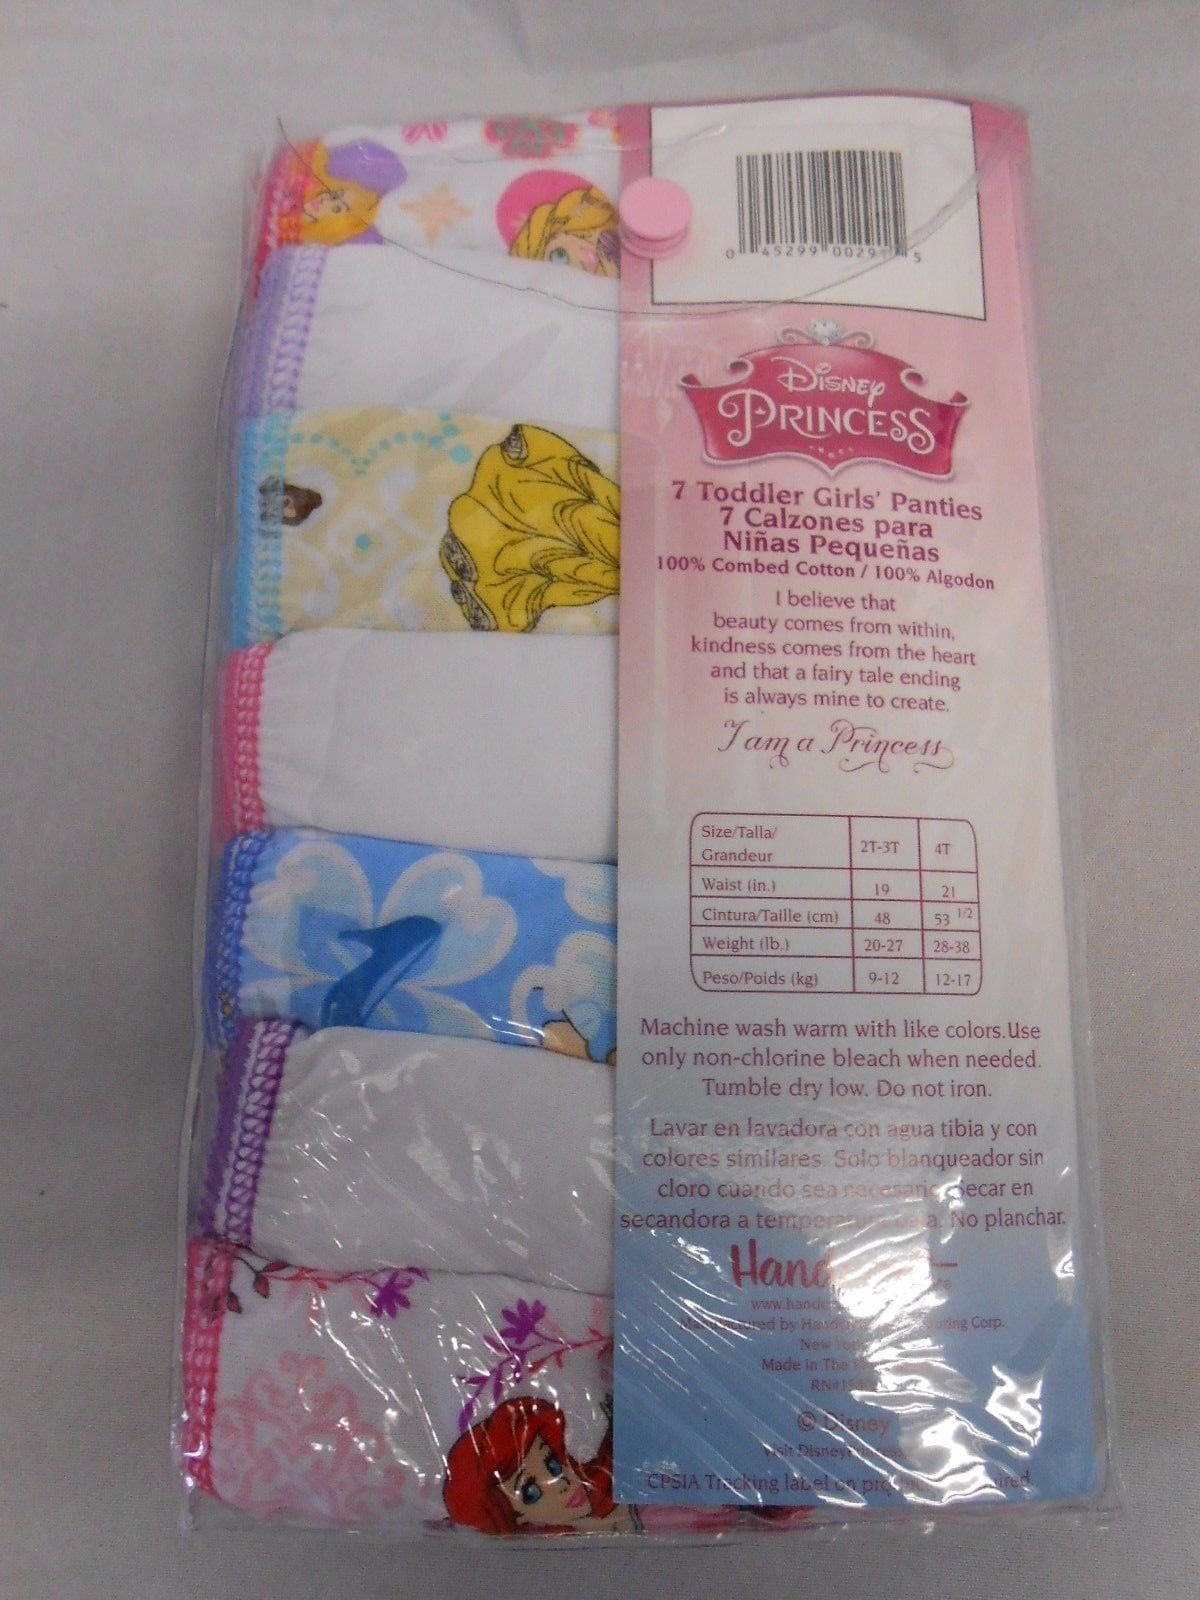 Disney Girls' Toddler Princess Underwear Mulipacks, Multi7pk, 2T